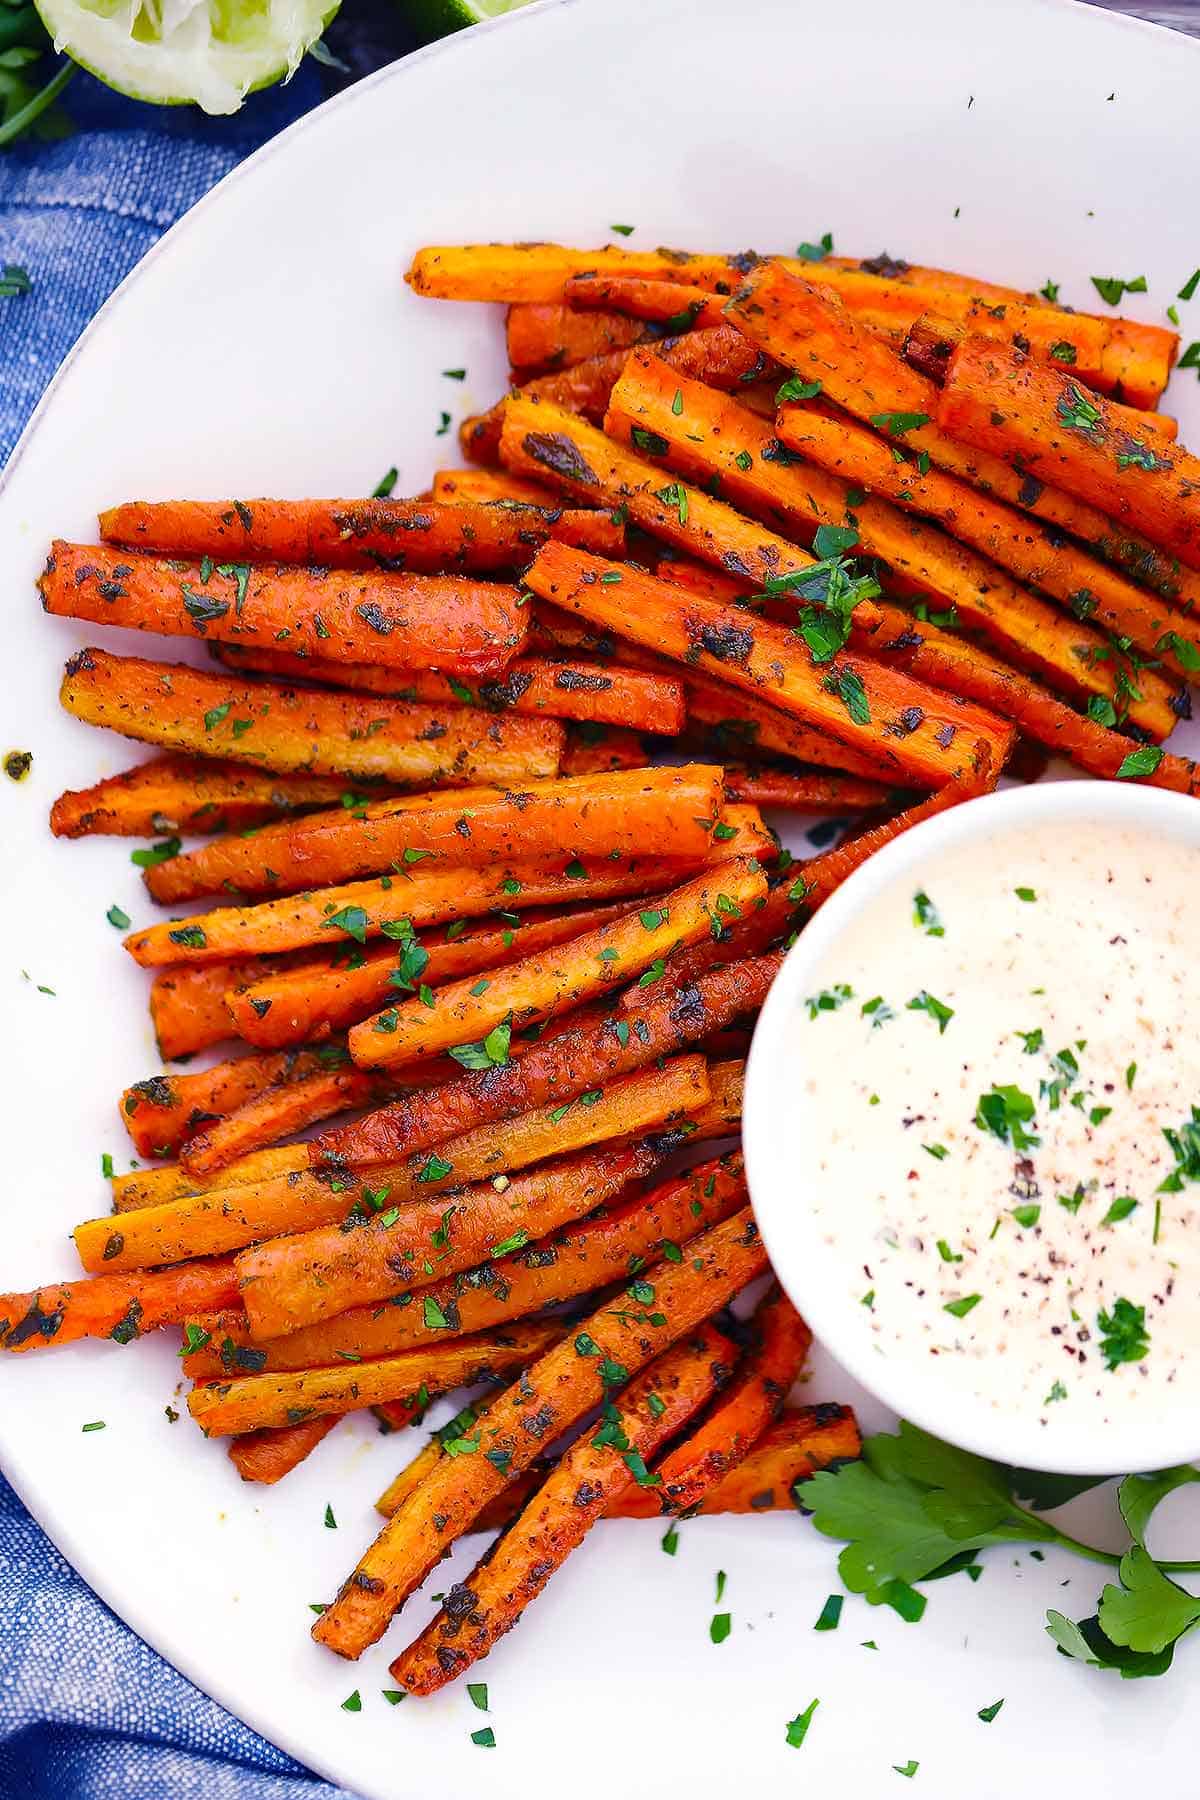 Carrot Recipes For Easter